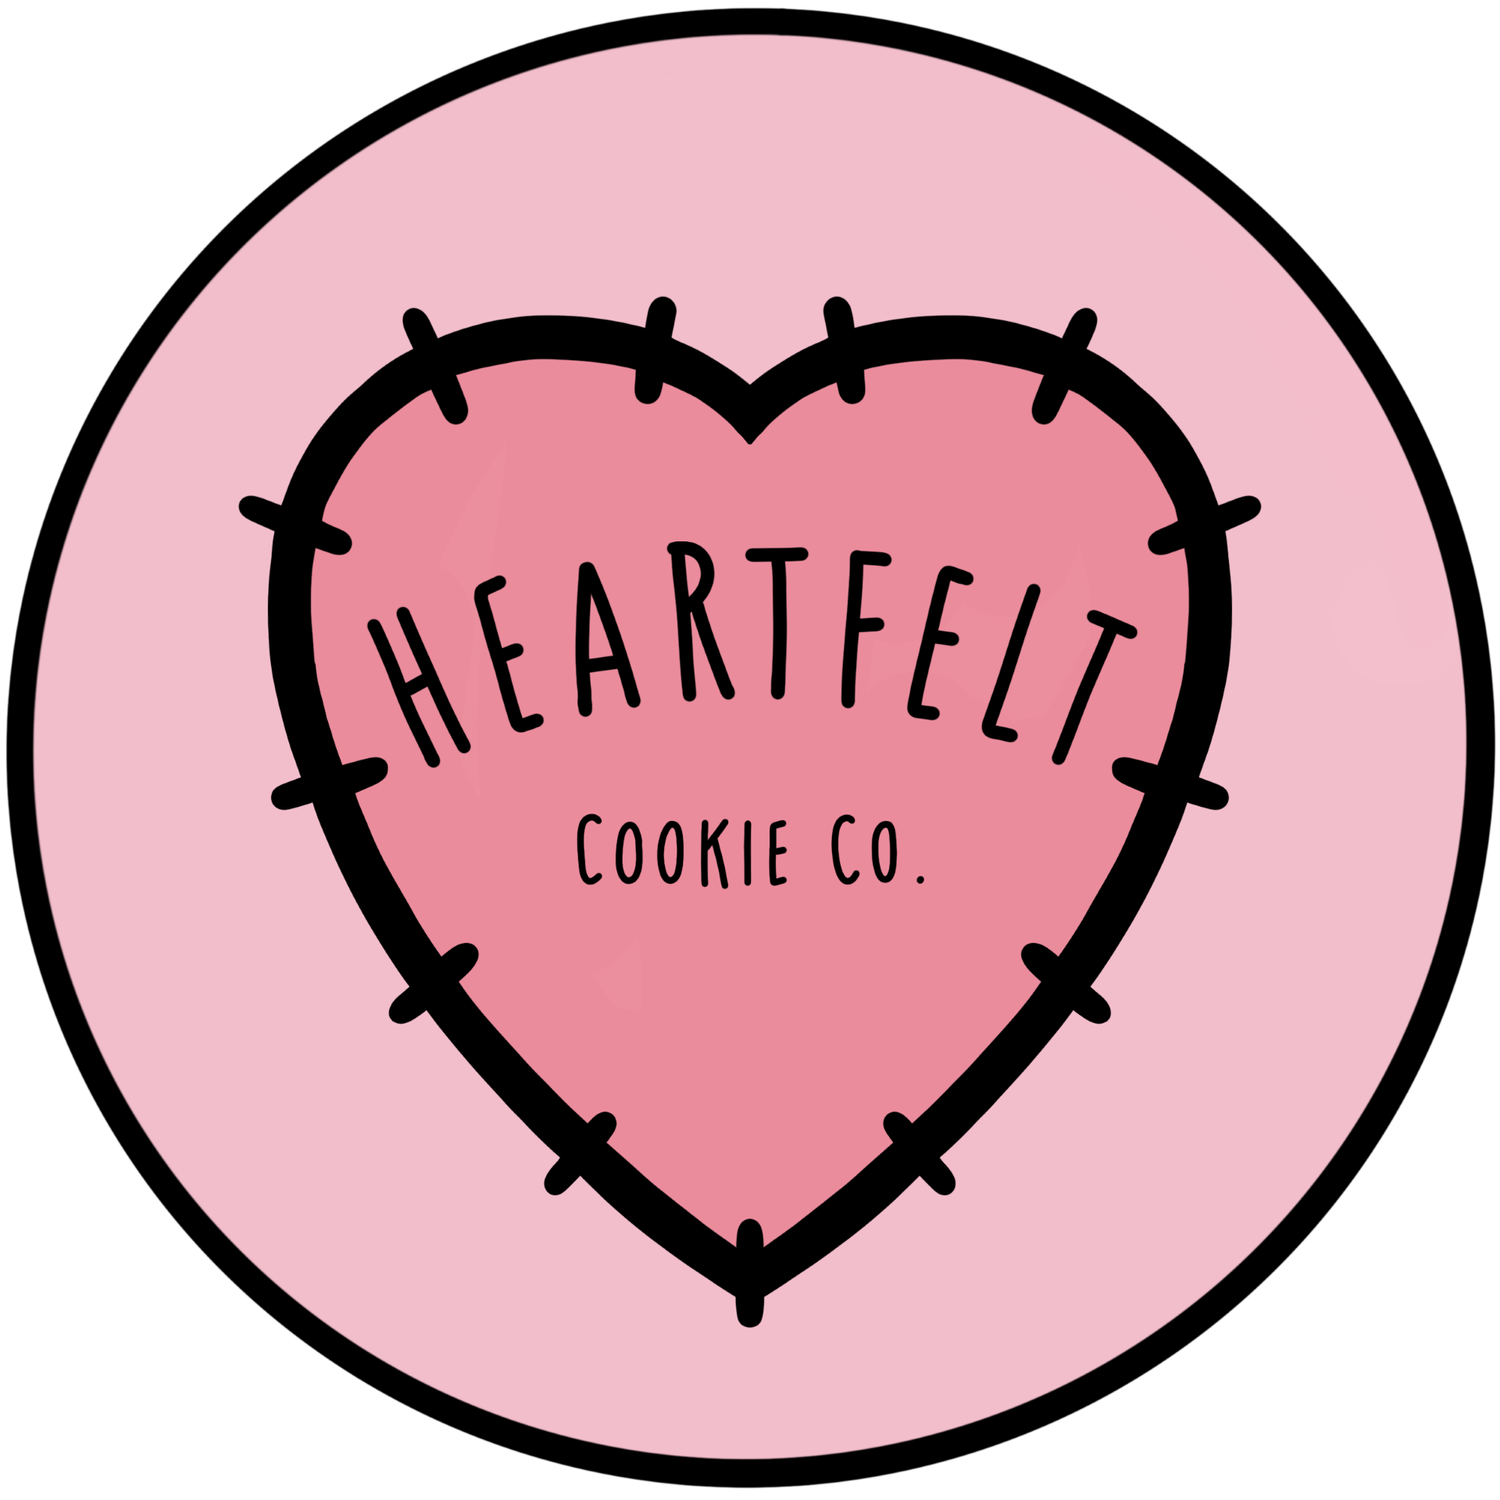 Heartfelt Cookie Co.